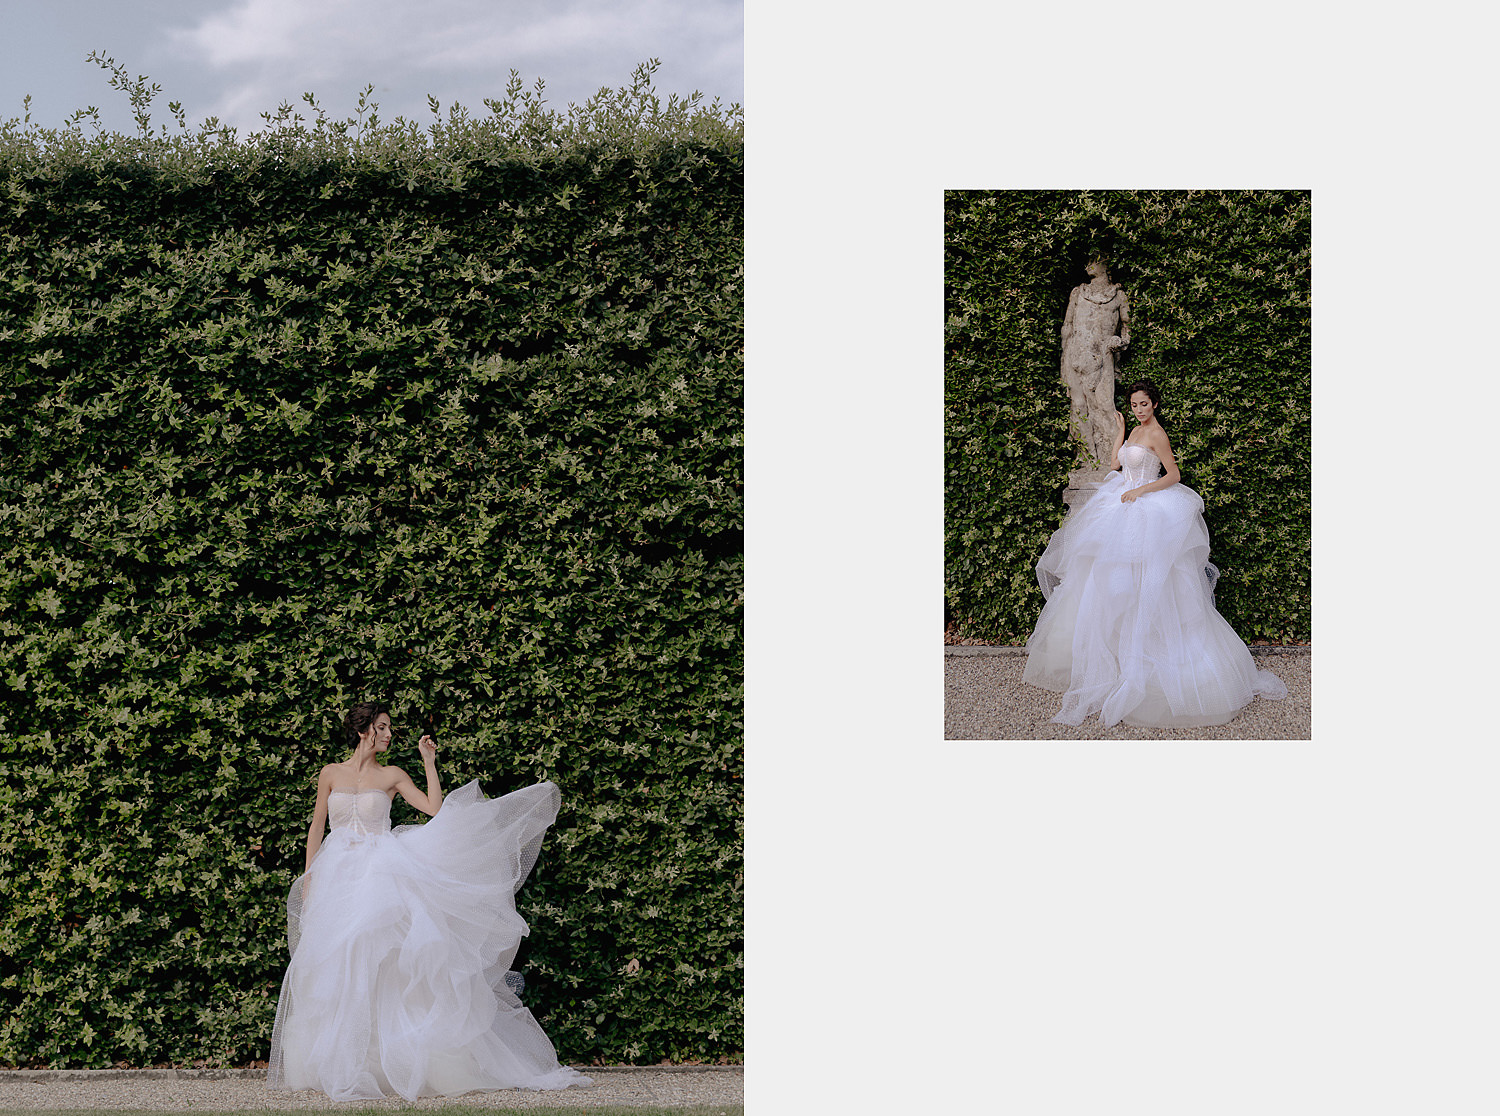 villa balbiano wedding photographer lake como bride elegant portraiture italian garden